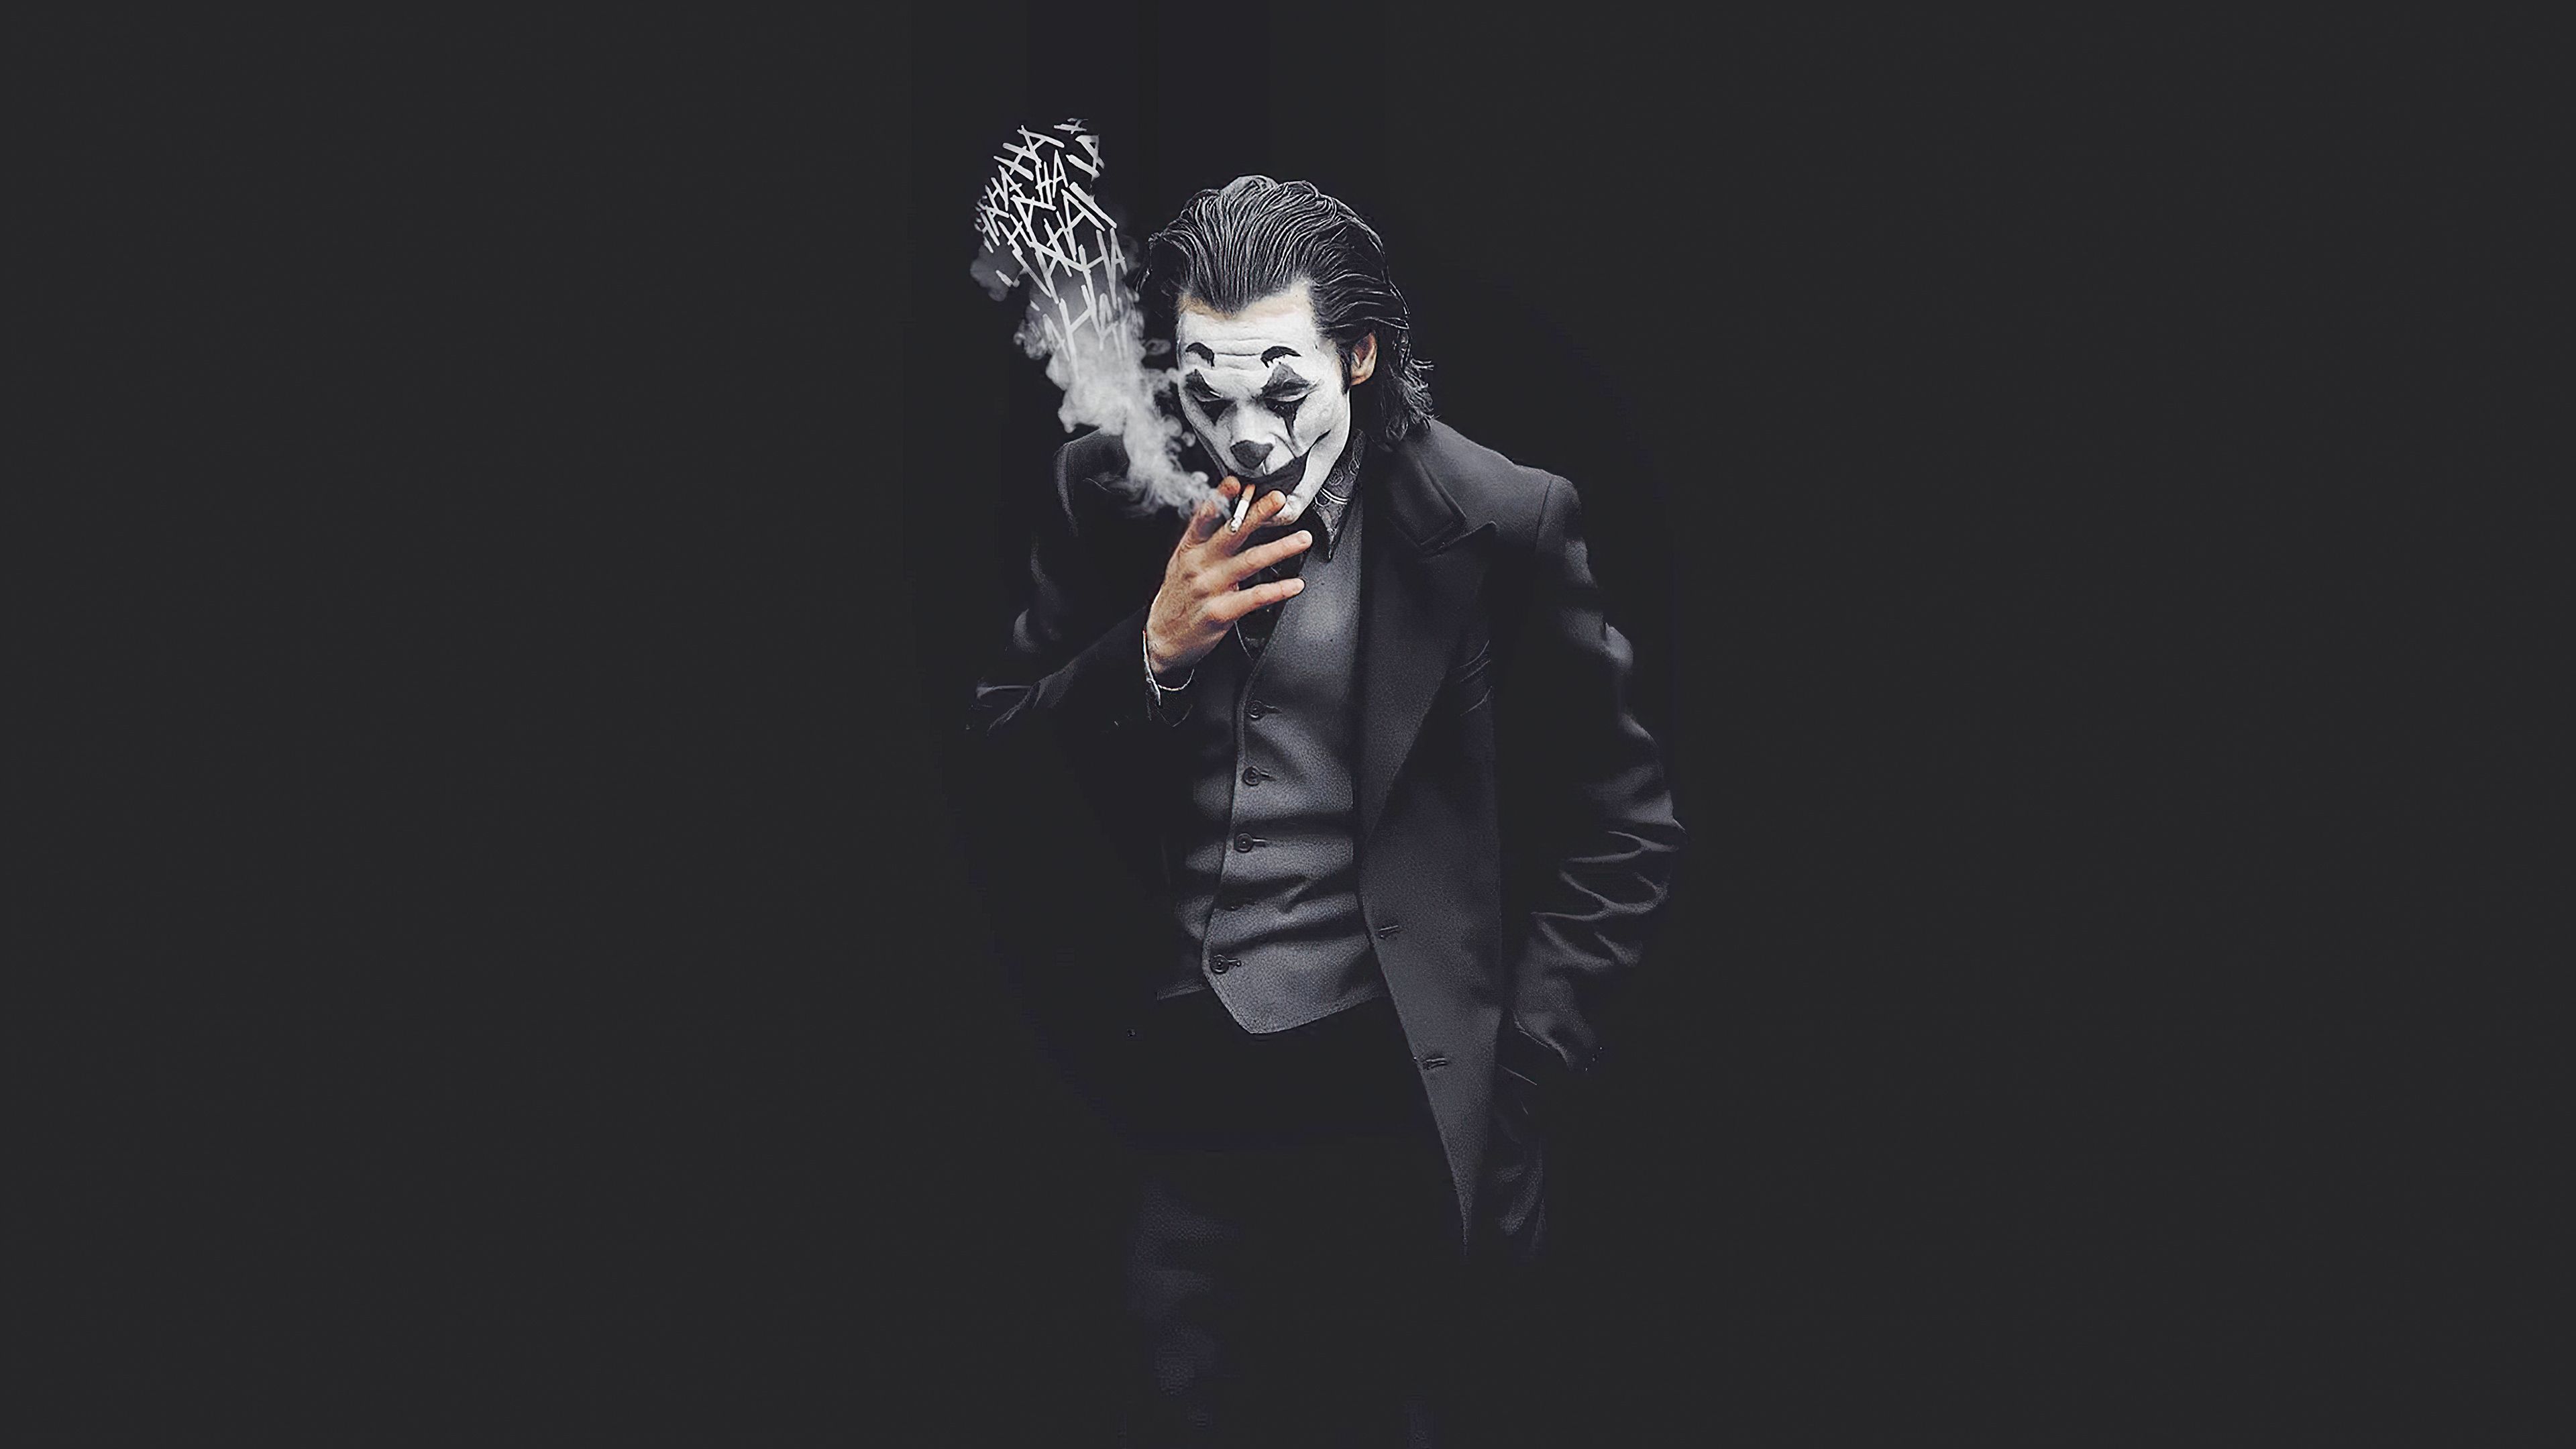 Joker Smoking Wallpaper Black And Whitewalpaperlist.com